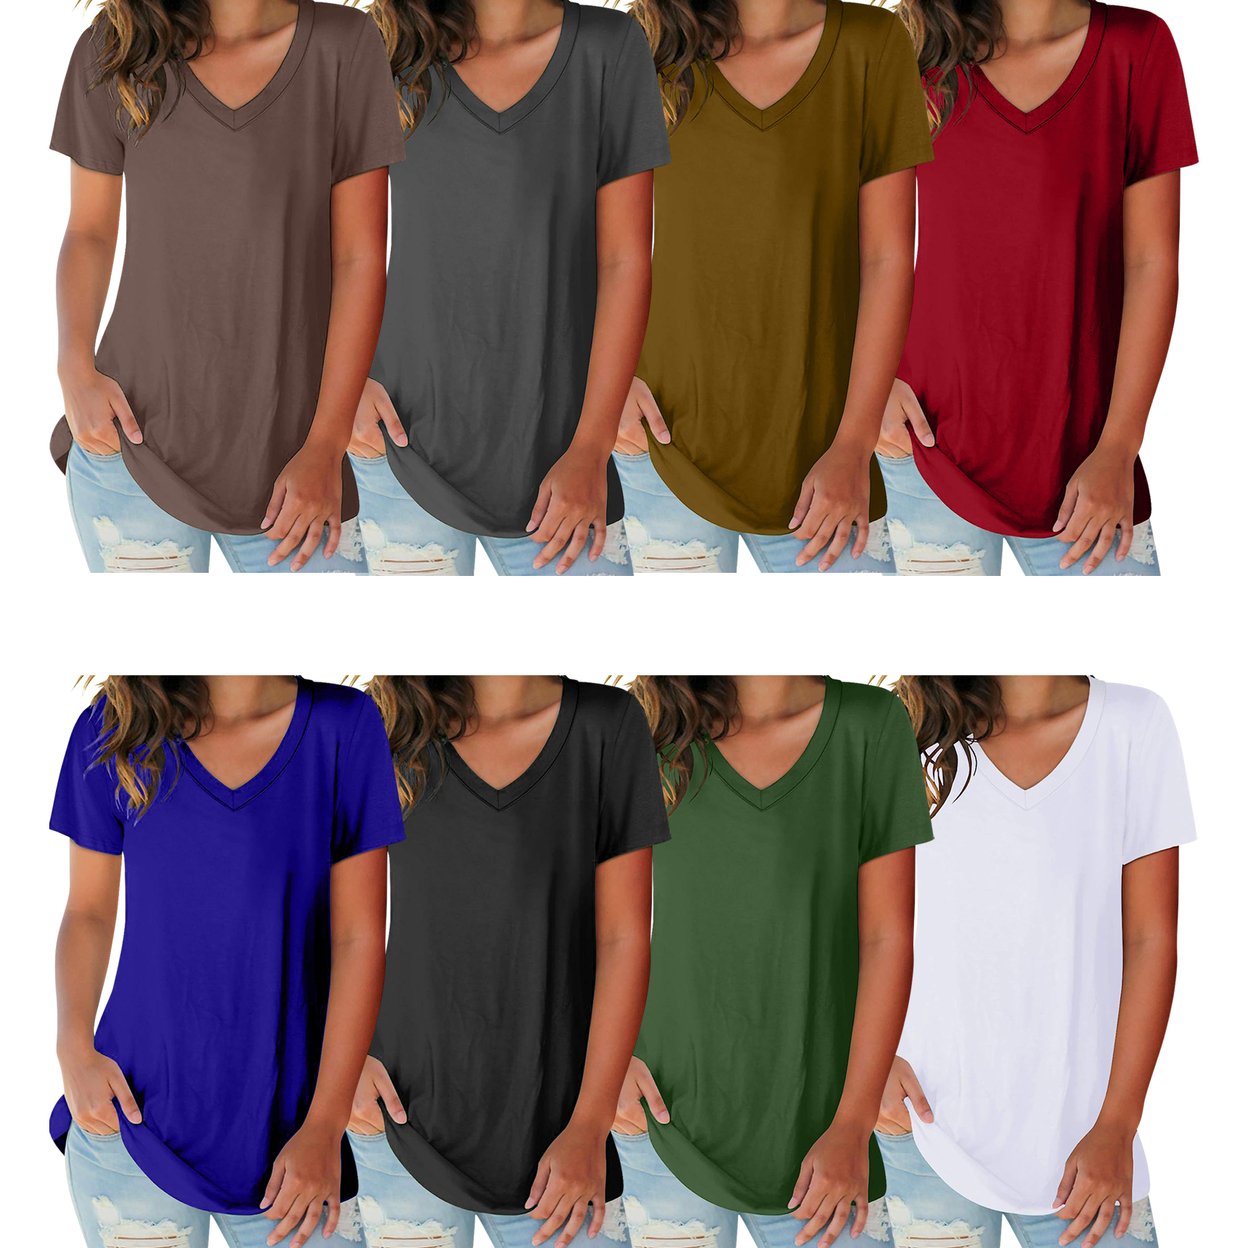 2-Pack: Women's Ultra Soft Smooth Cotton Blend Basic V-Neck Short Sleeve Shirts - Black & Brown, X-large